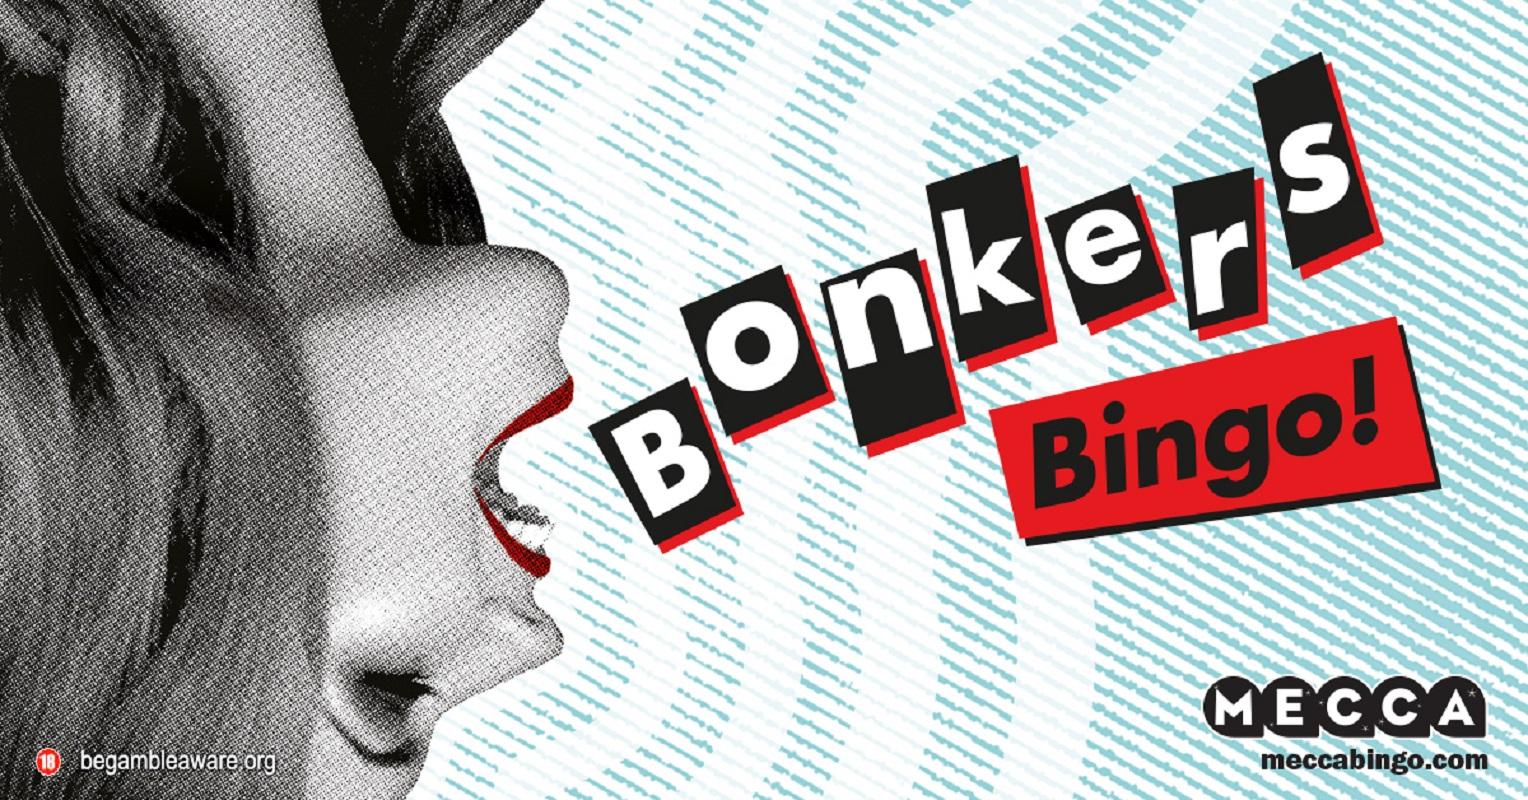 create own bonkers bingo